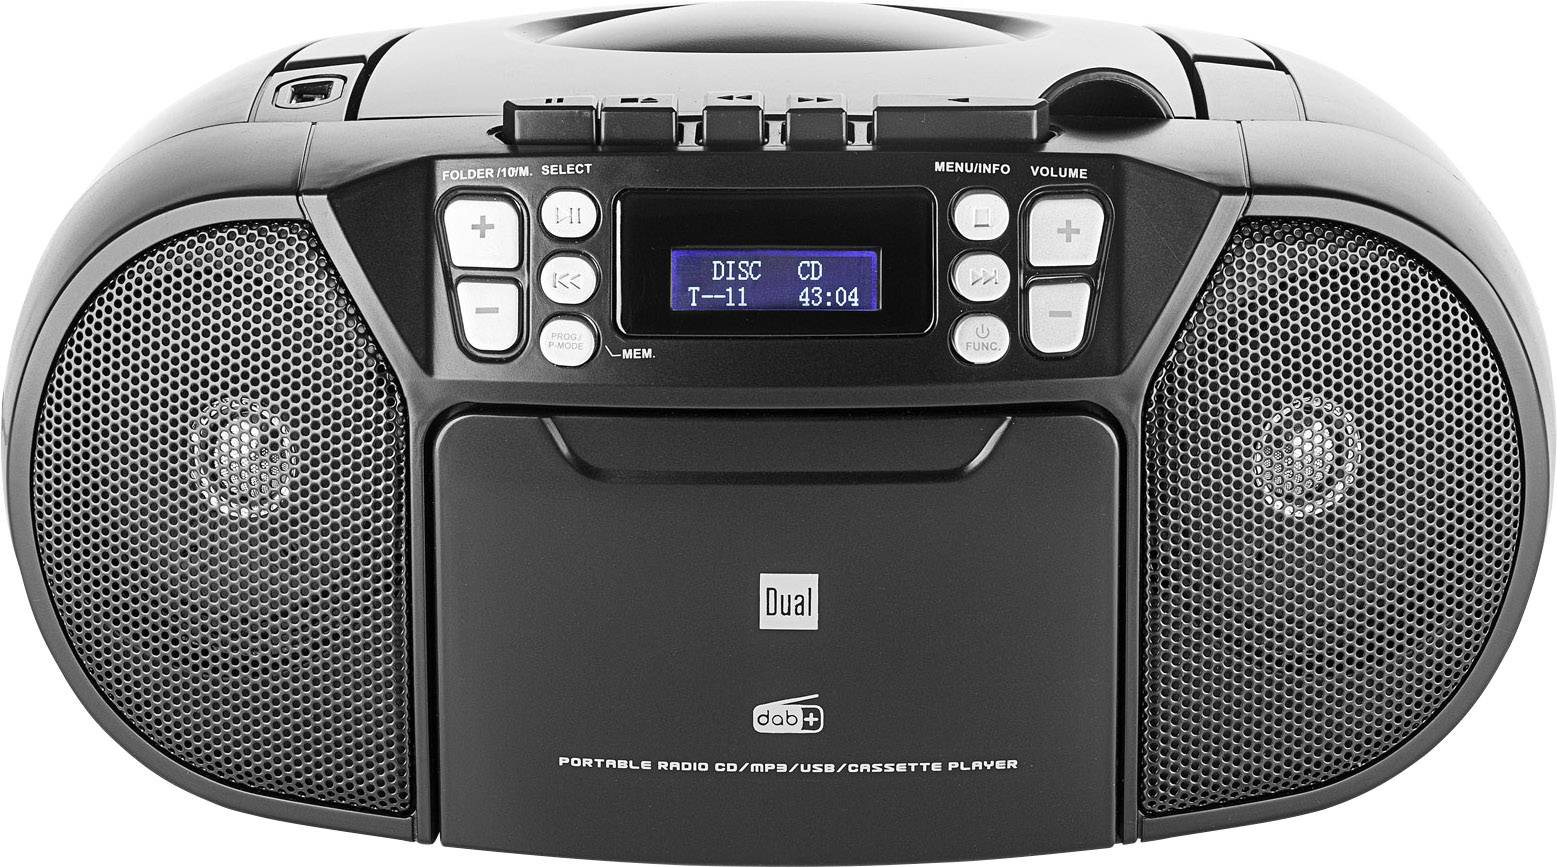 enthousiast Modderig Dalset Dual DAB-P 210 Radio/CD-speler DAB+, VHF (FM) AUX, CD, Cassette Zwart kopen  ? Conrad Electronic